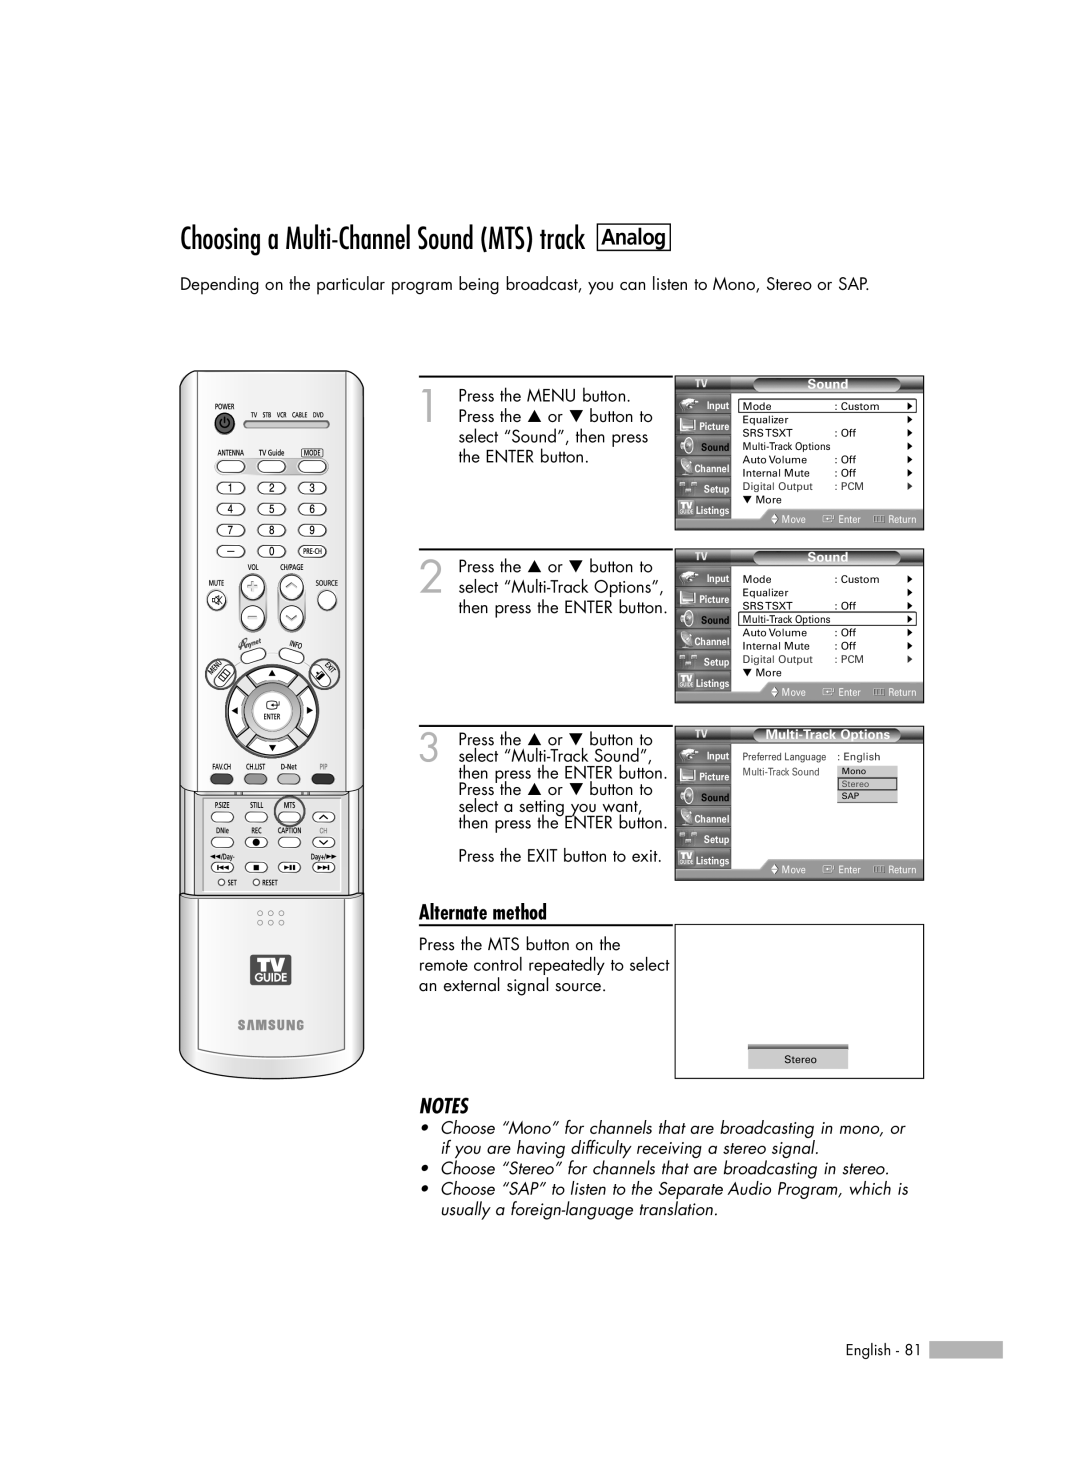 Samsung HL-R5688W manual Analog, Choosing a Multi-Channel Sound MTS track, Alternate method 